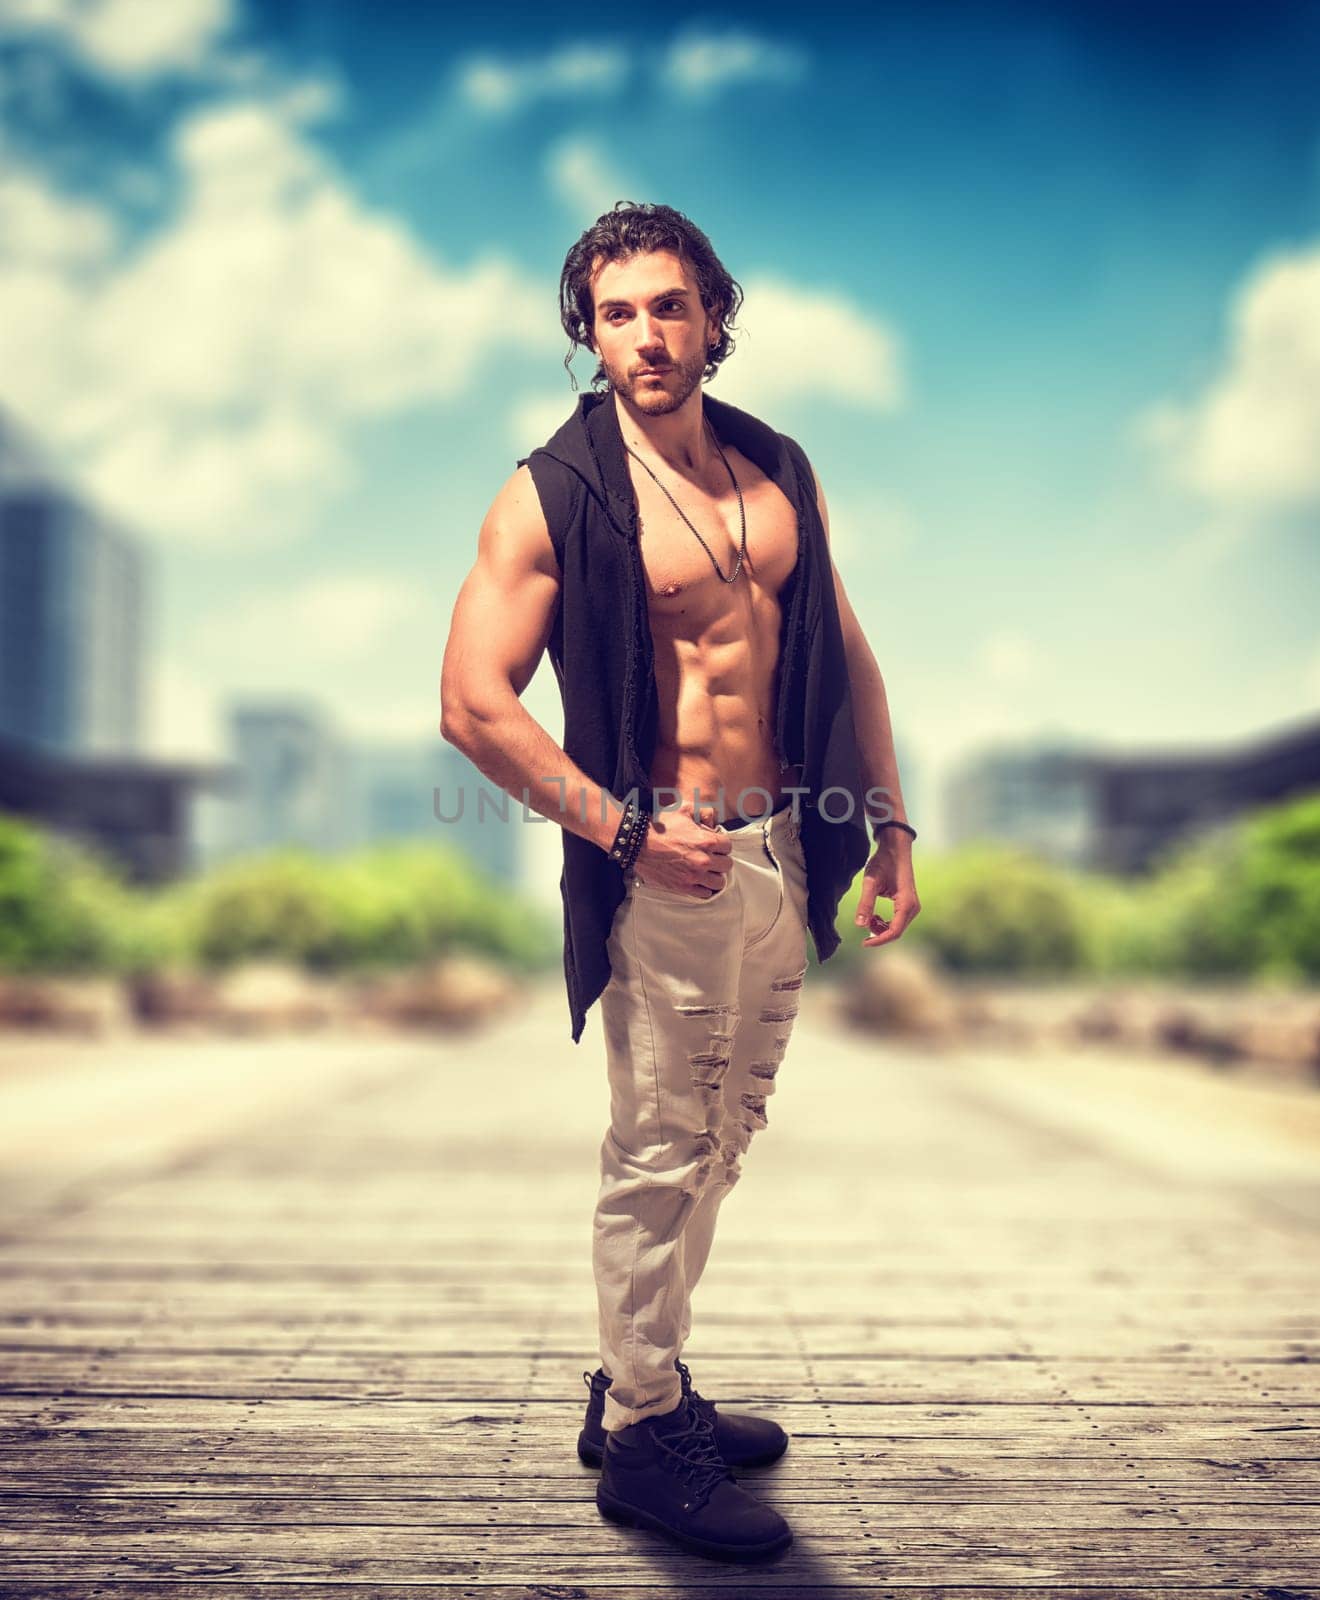 Shirtless man standing on brick road by artofphoto